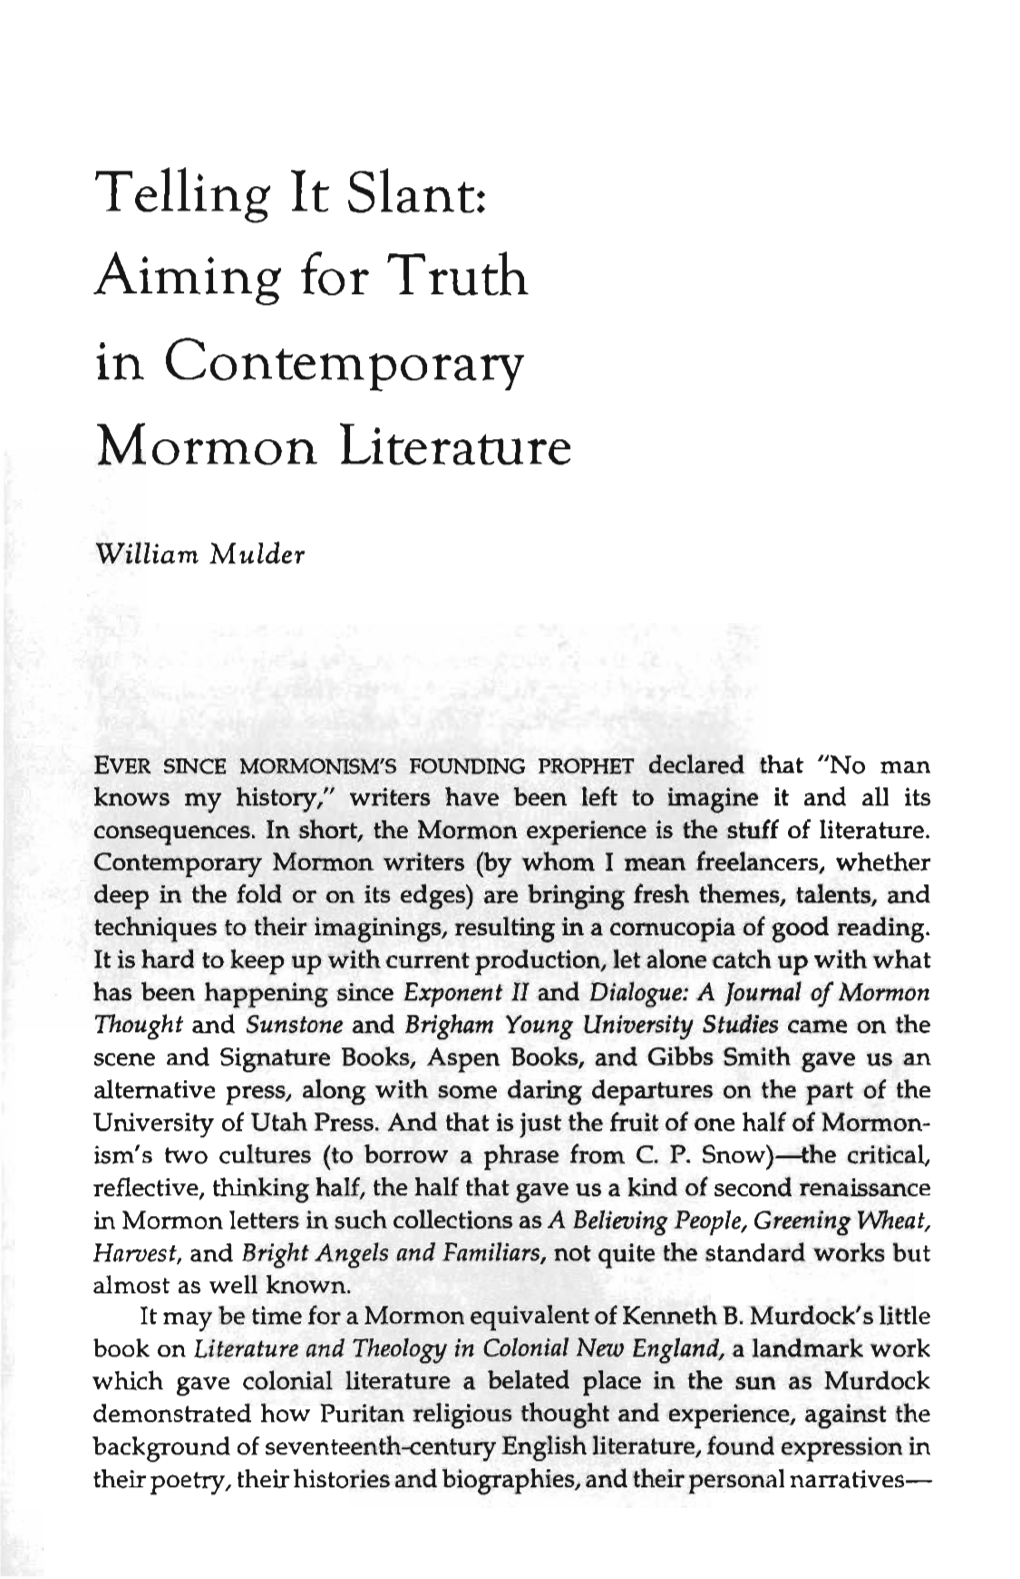 Telling It Slant: Aiming for Truth in Contemporary Mormon Literature